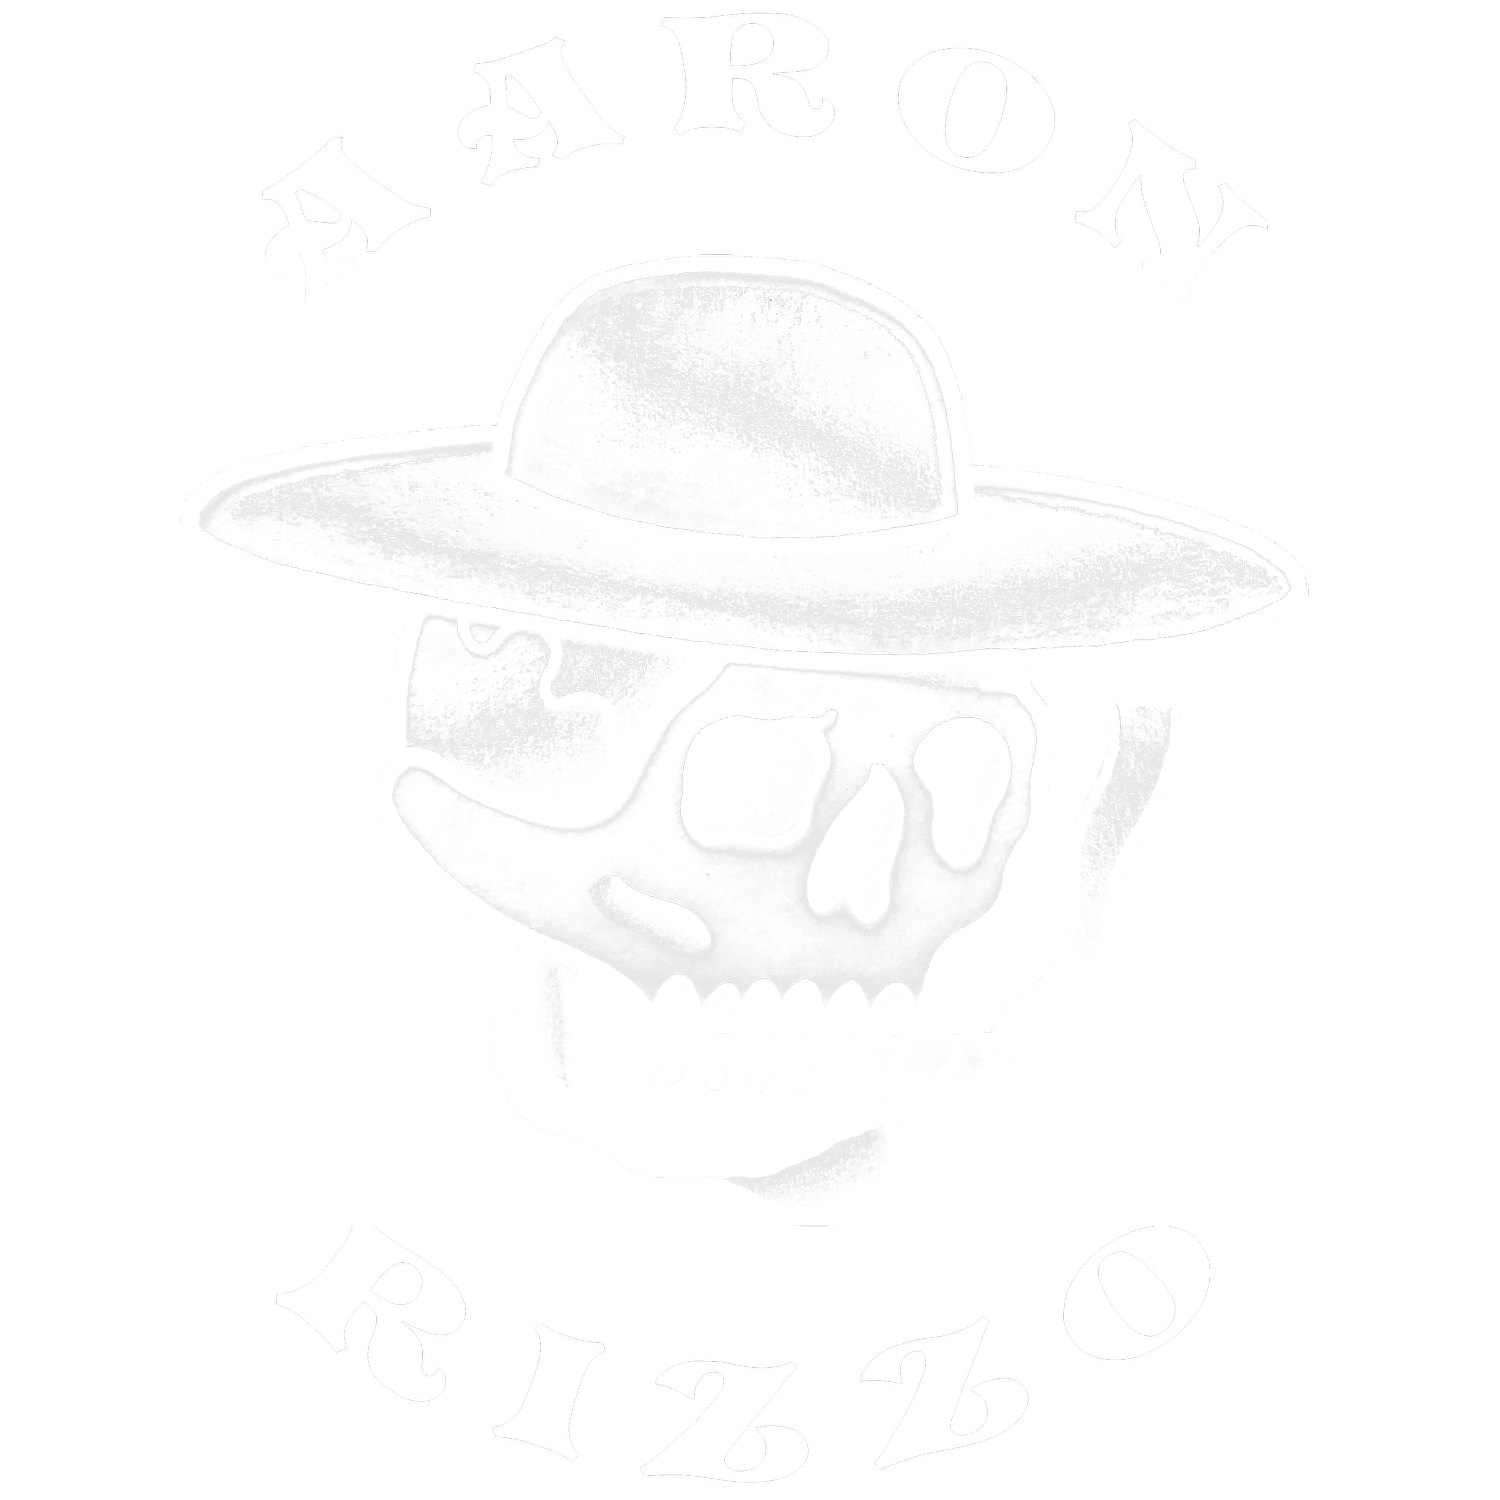 Aaron Rizzo